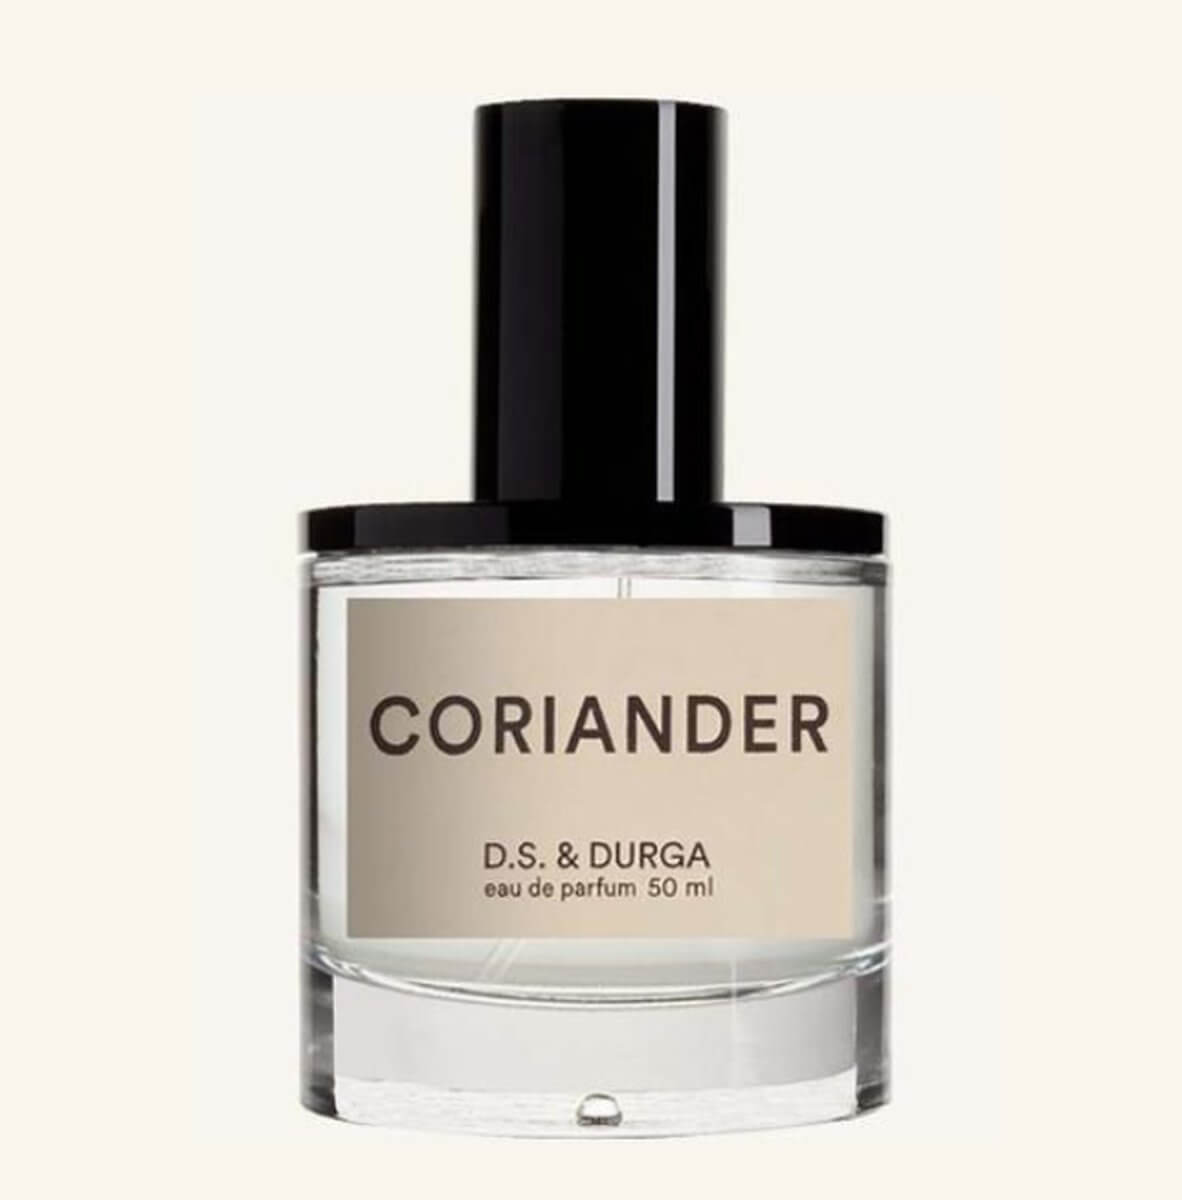 Coriander by DS & Durga at Indigo Perfumery